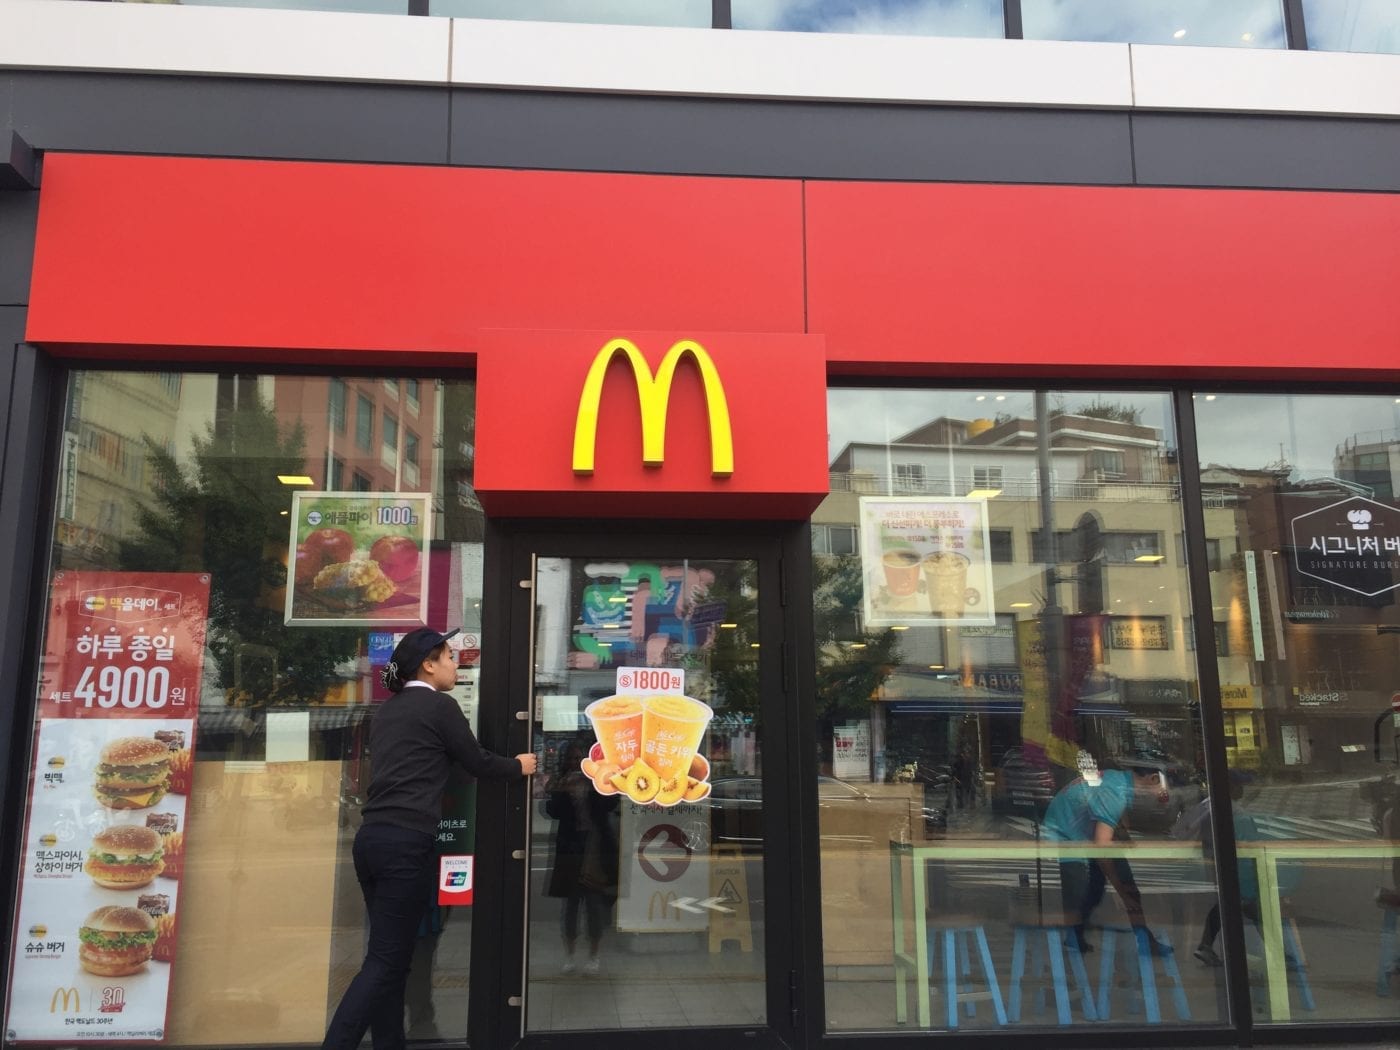 McDonald's in seoul